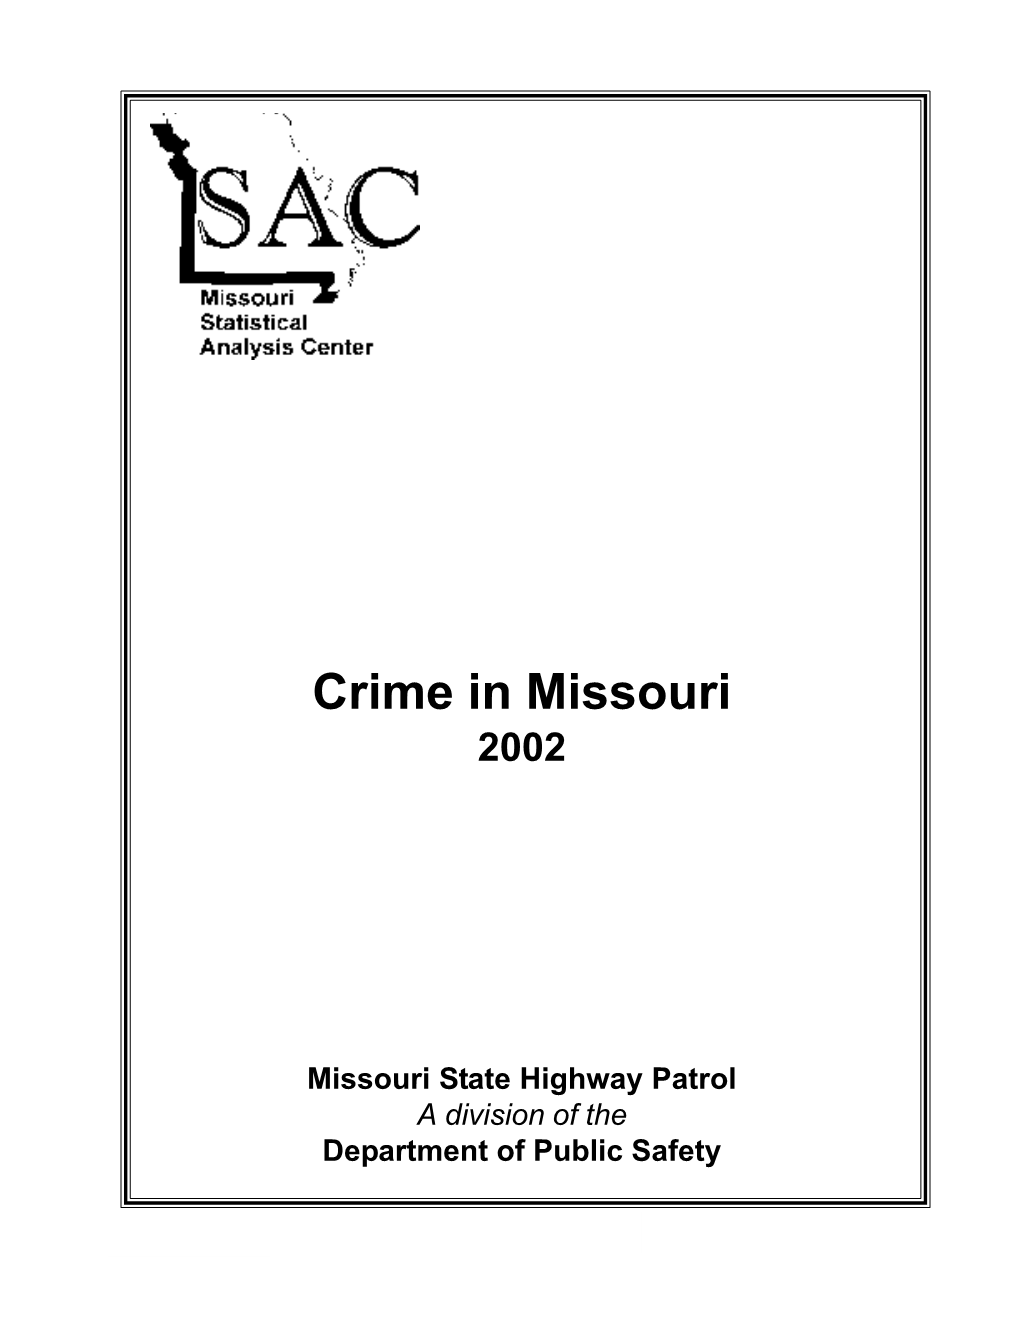 Crime in Missouri 2002